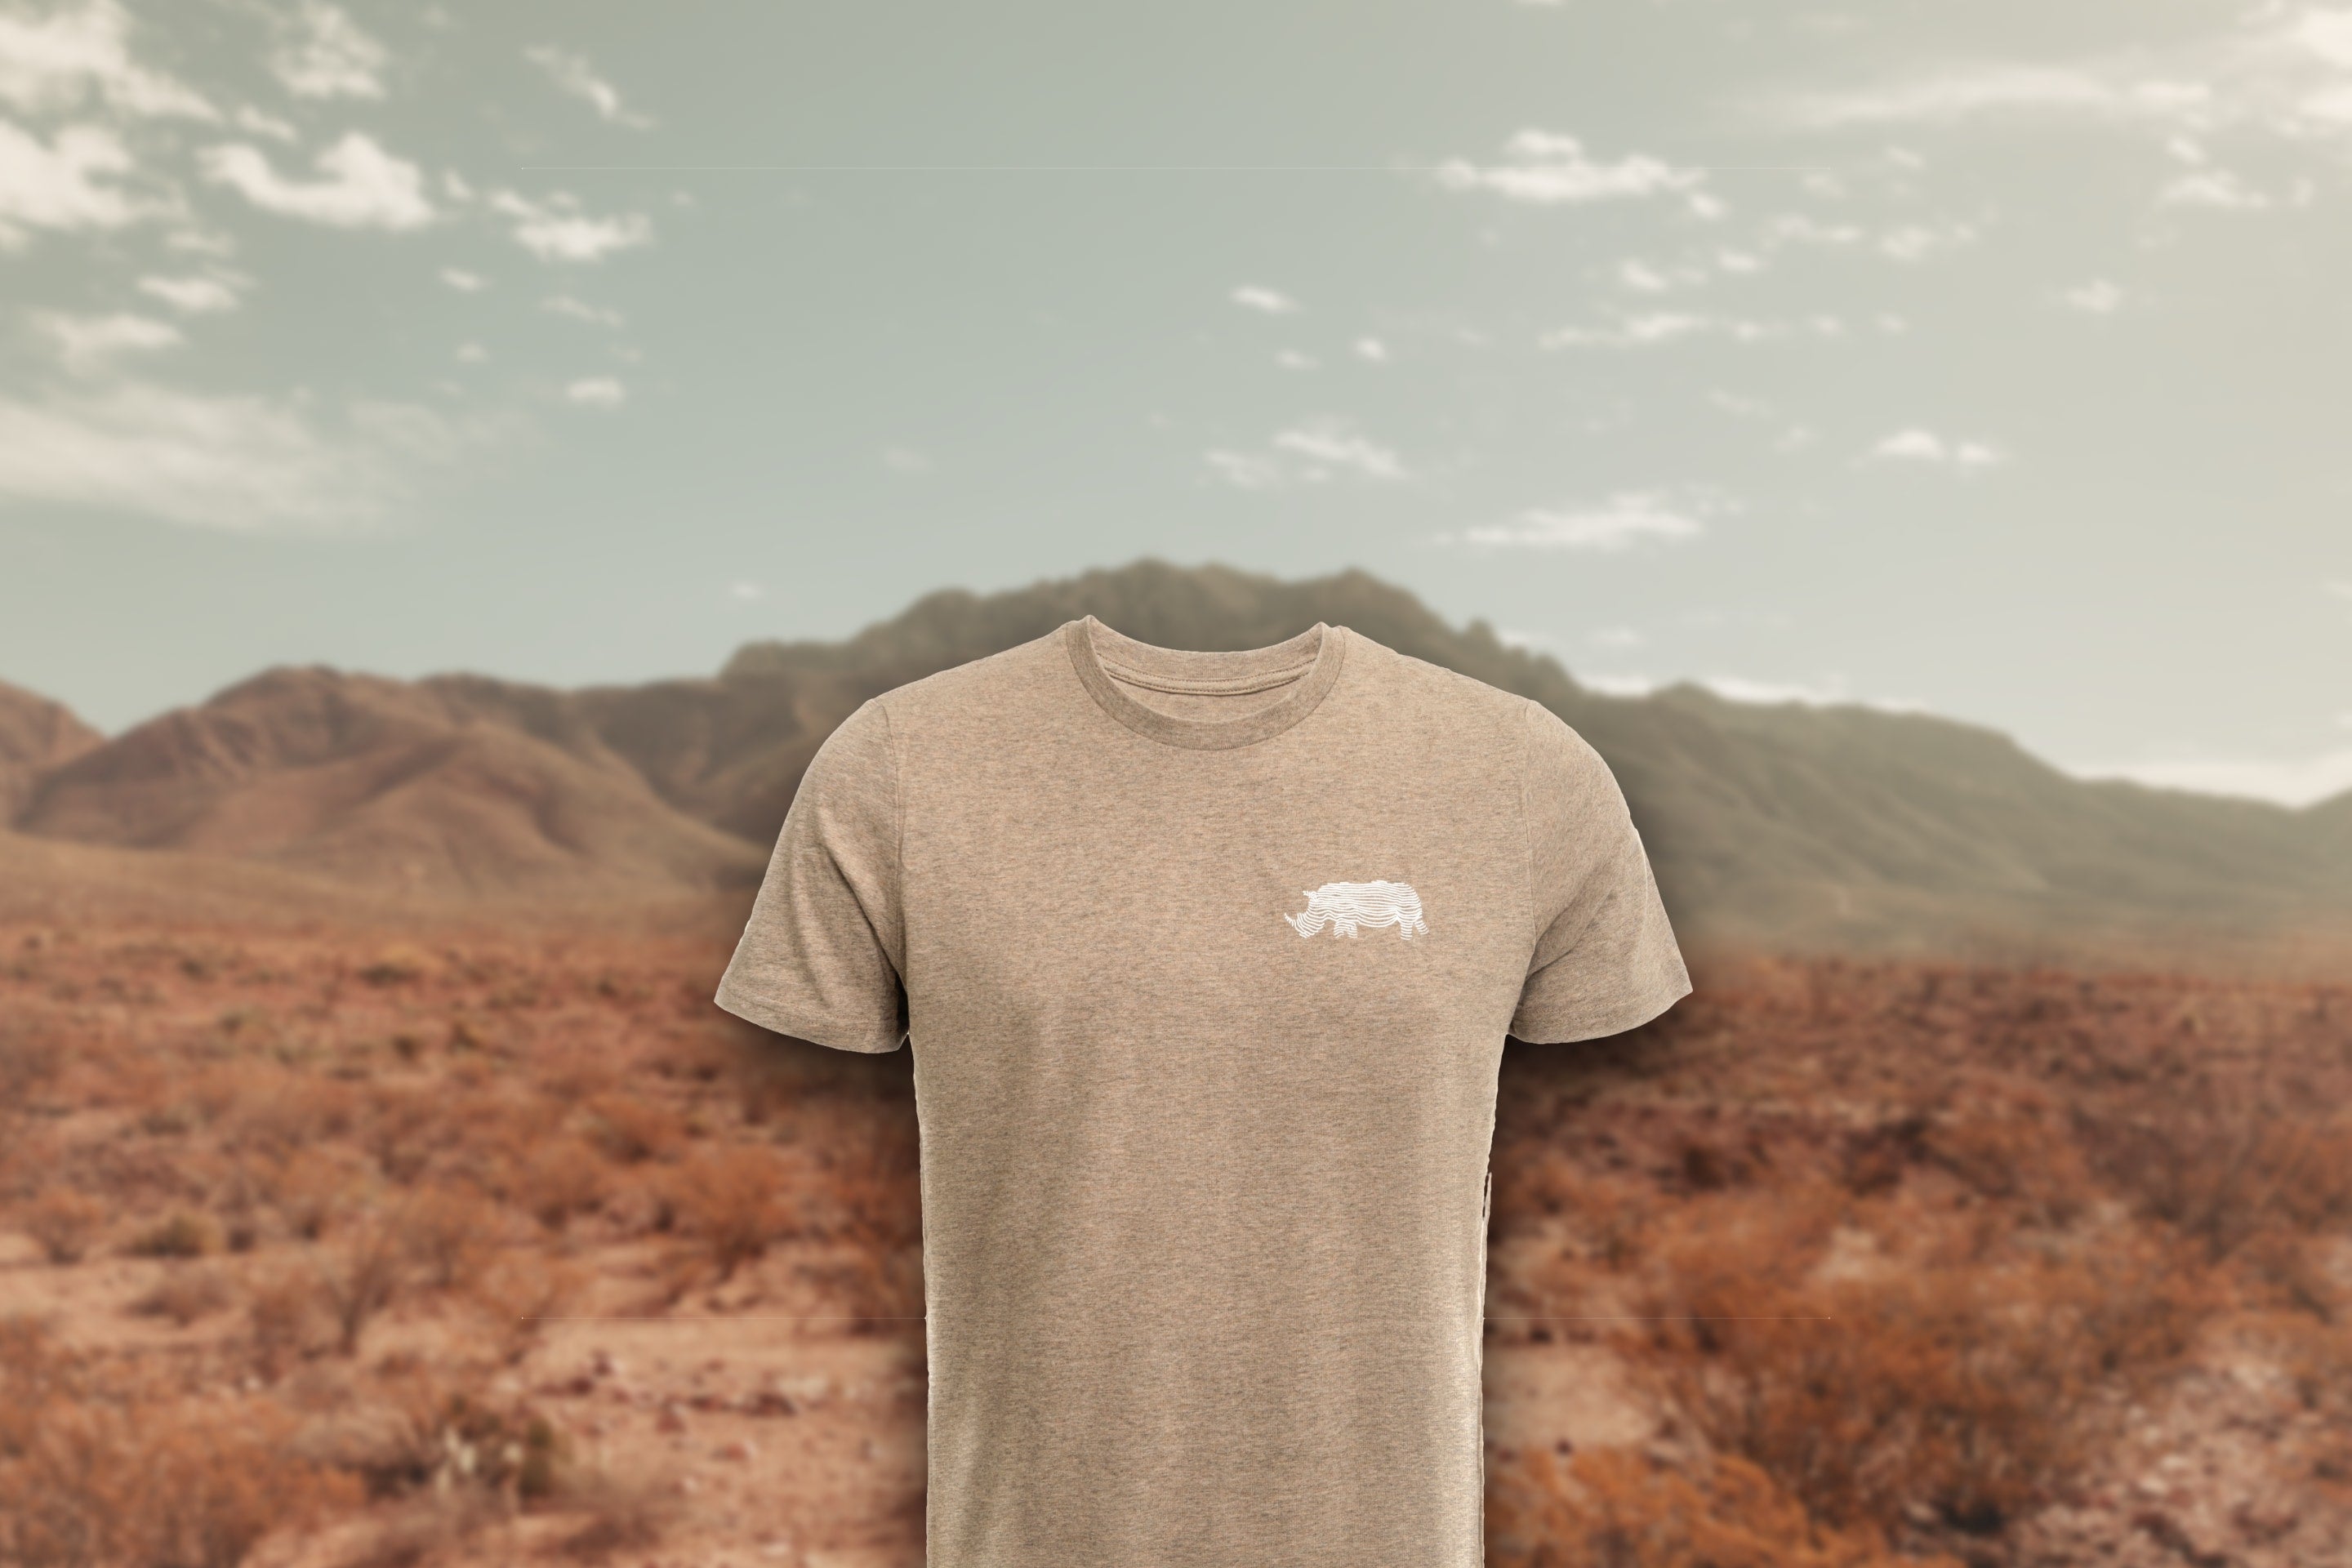 Rhinoceros Rhino Cameo Sustainable Quality T-shirt